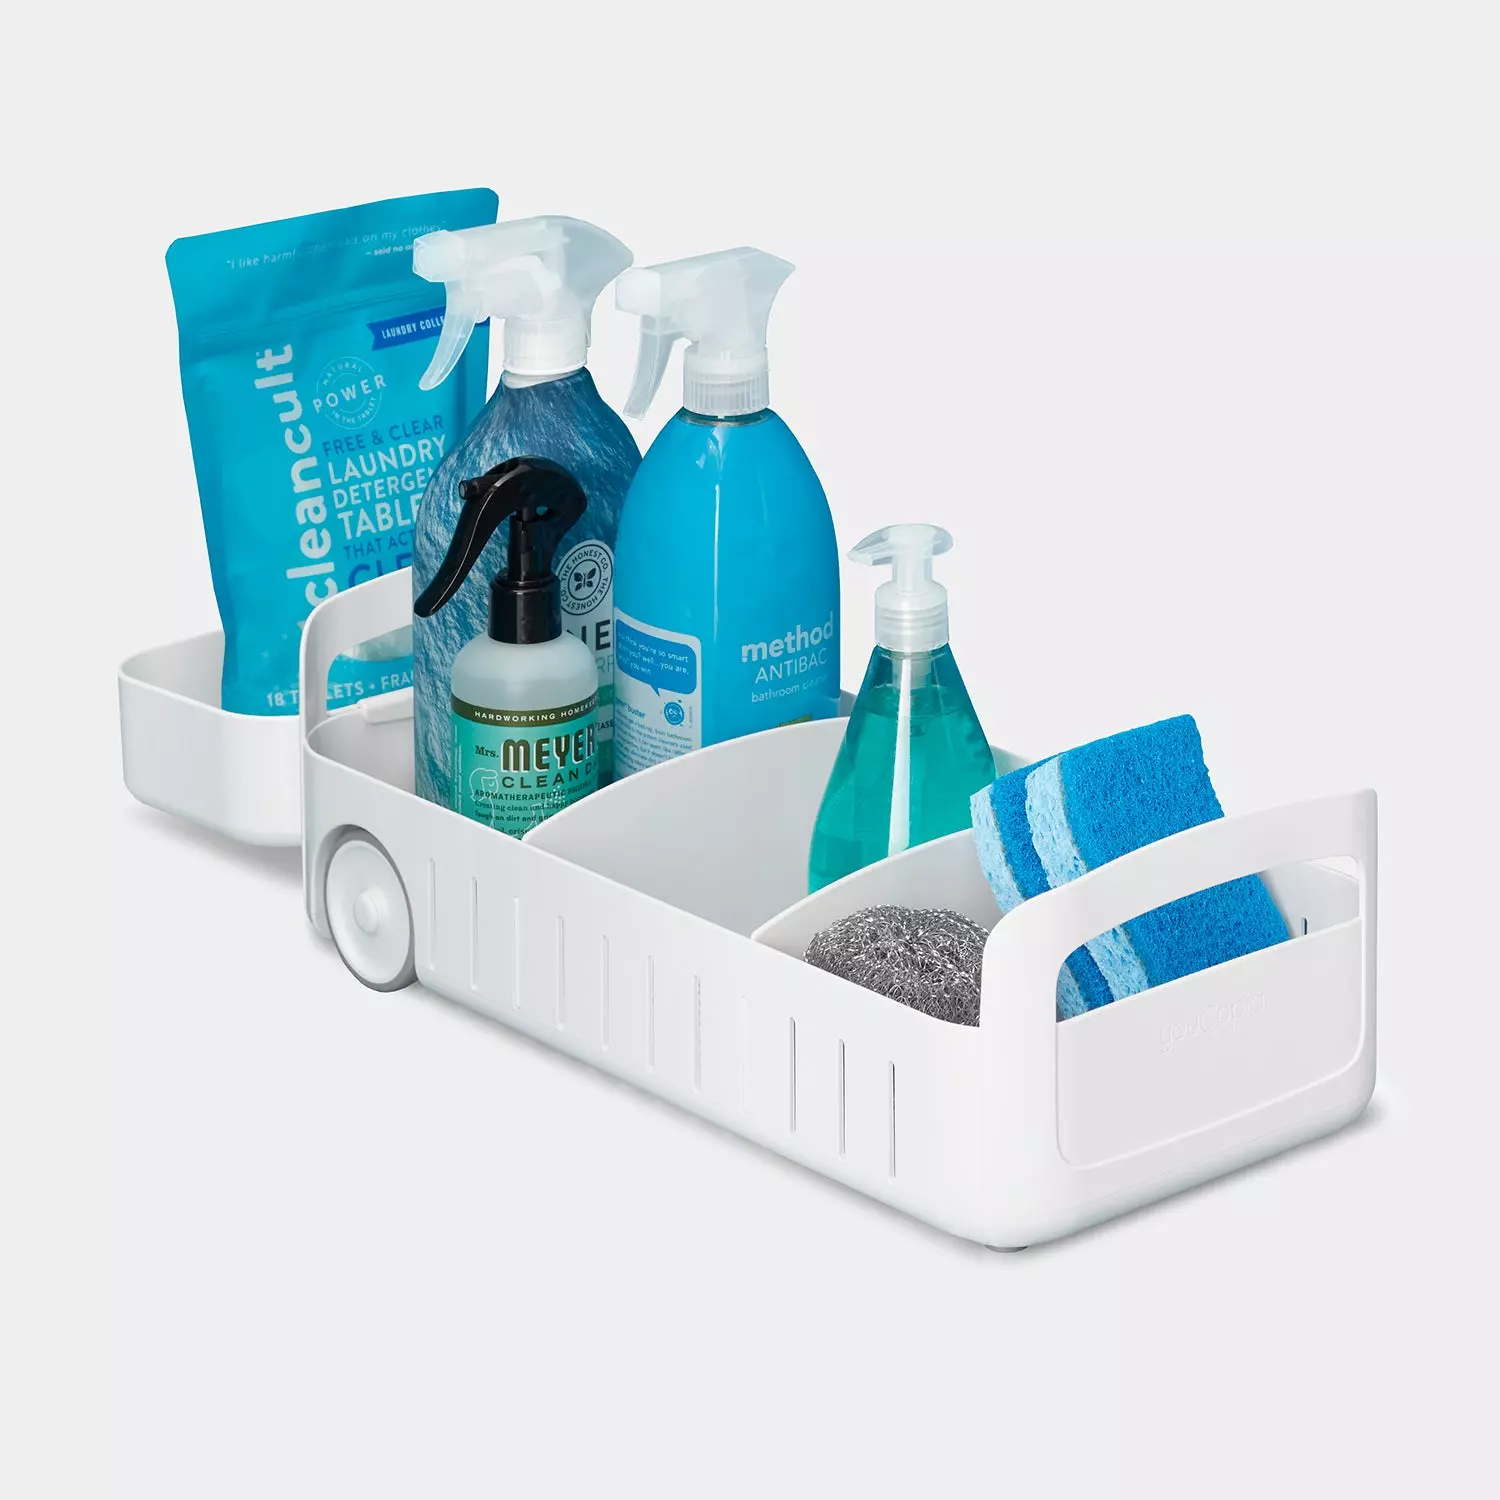 Bisupply Cleaning Supplies Organizer Caddies - 4pk Bathroom Cleaning Caddy Set